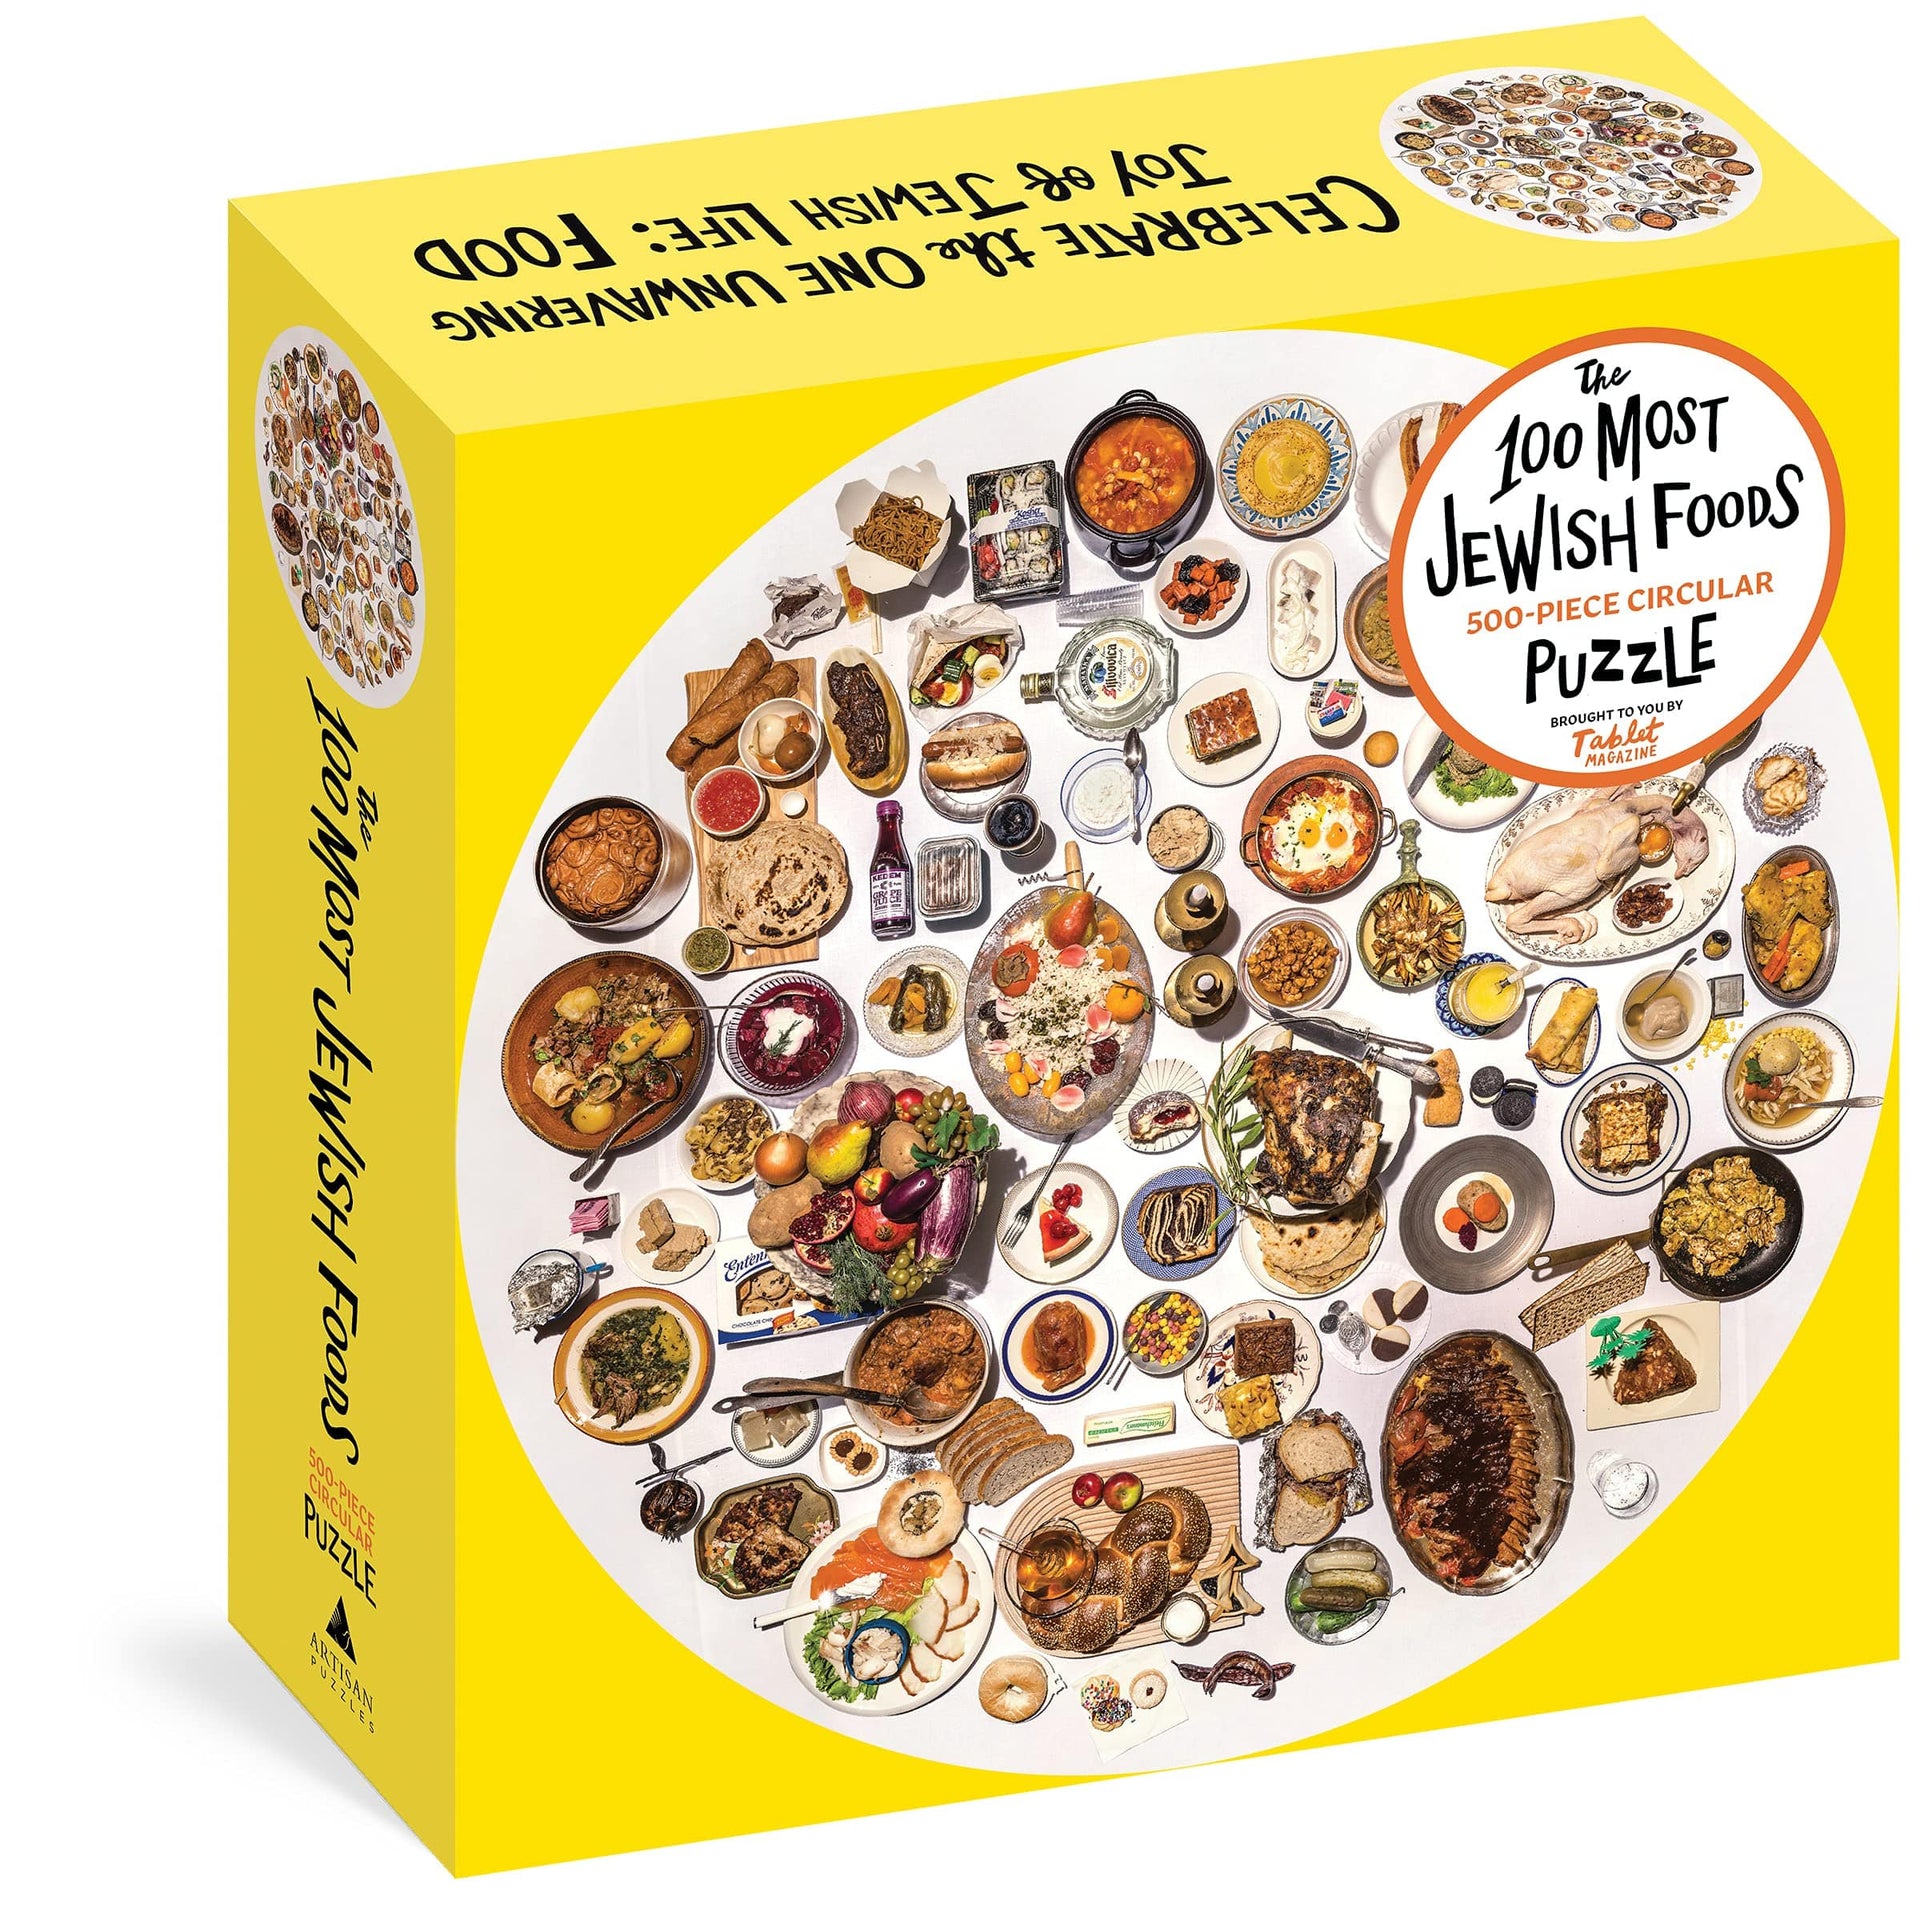 Artisan Puzzles The 100 Most Jewish Foods: 500-Piece Circular Puzzle